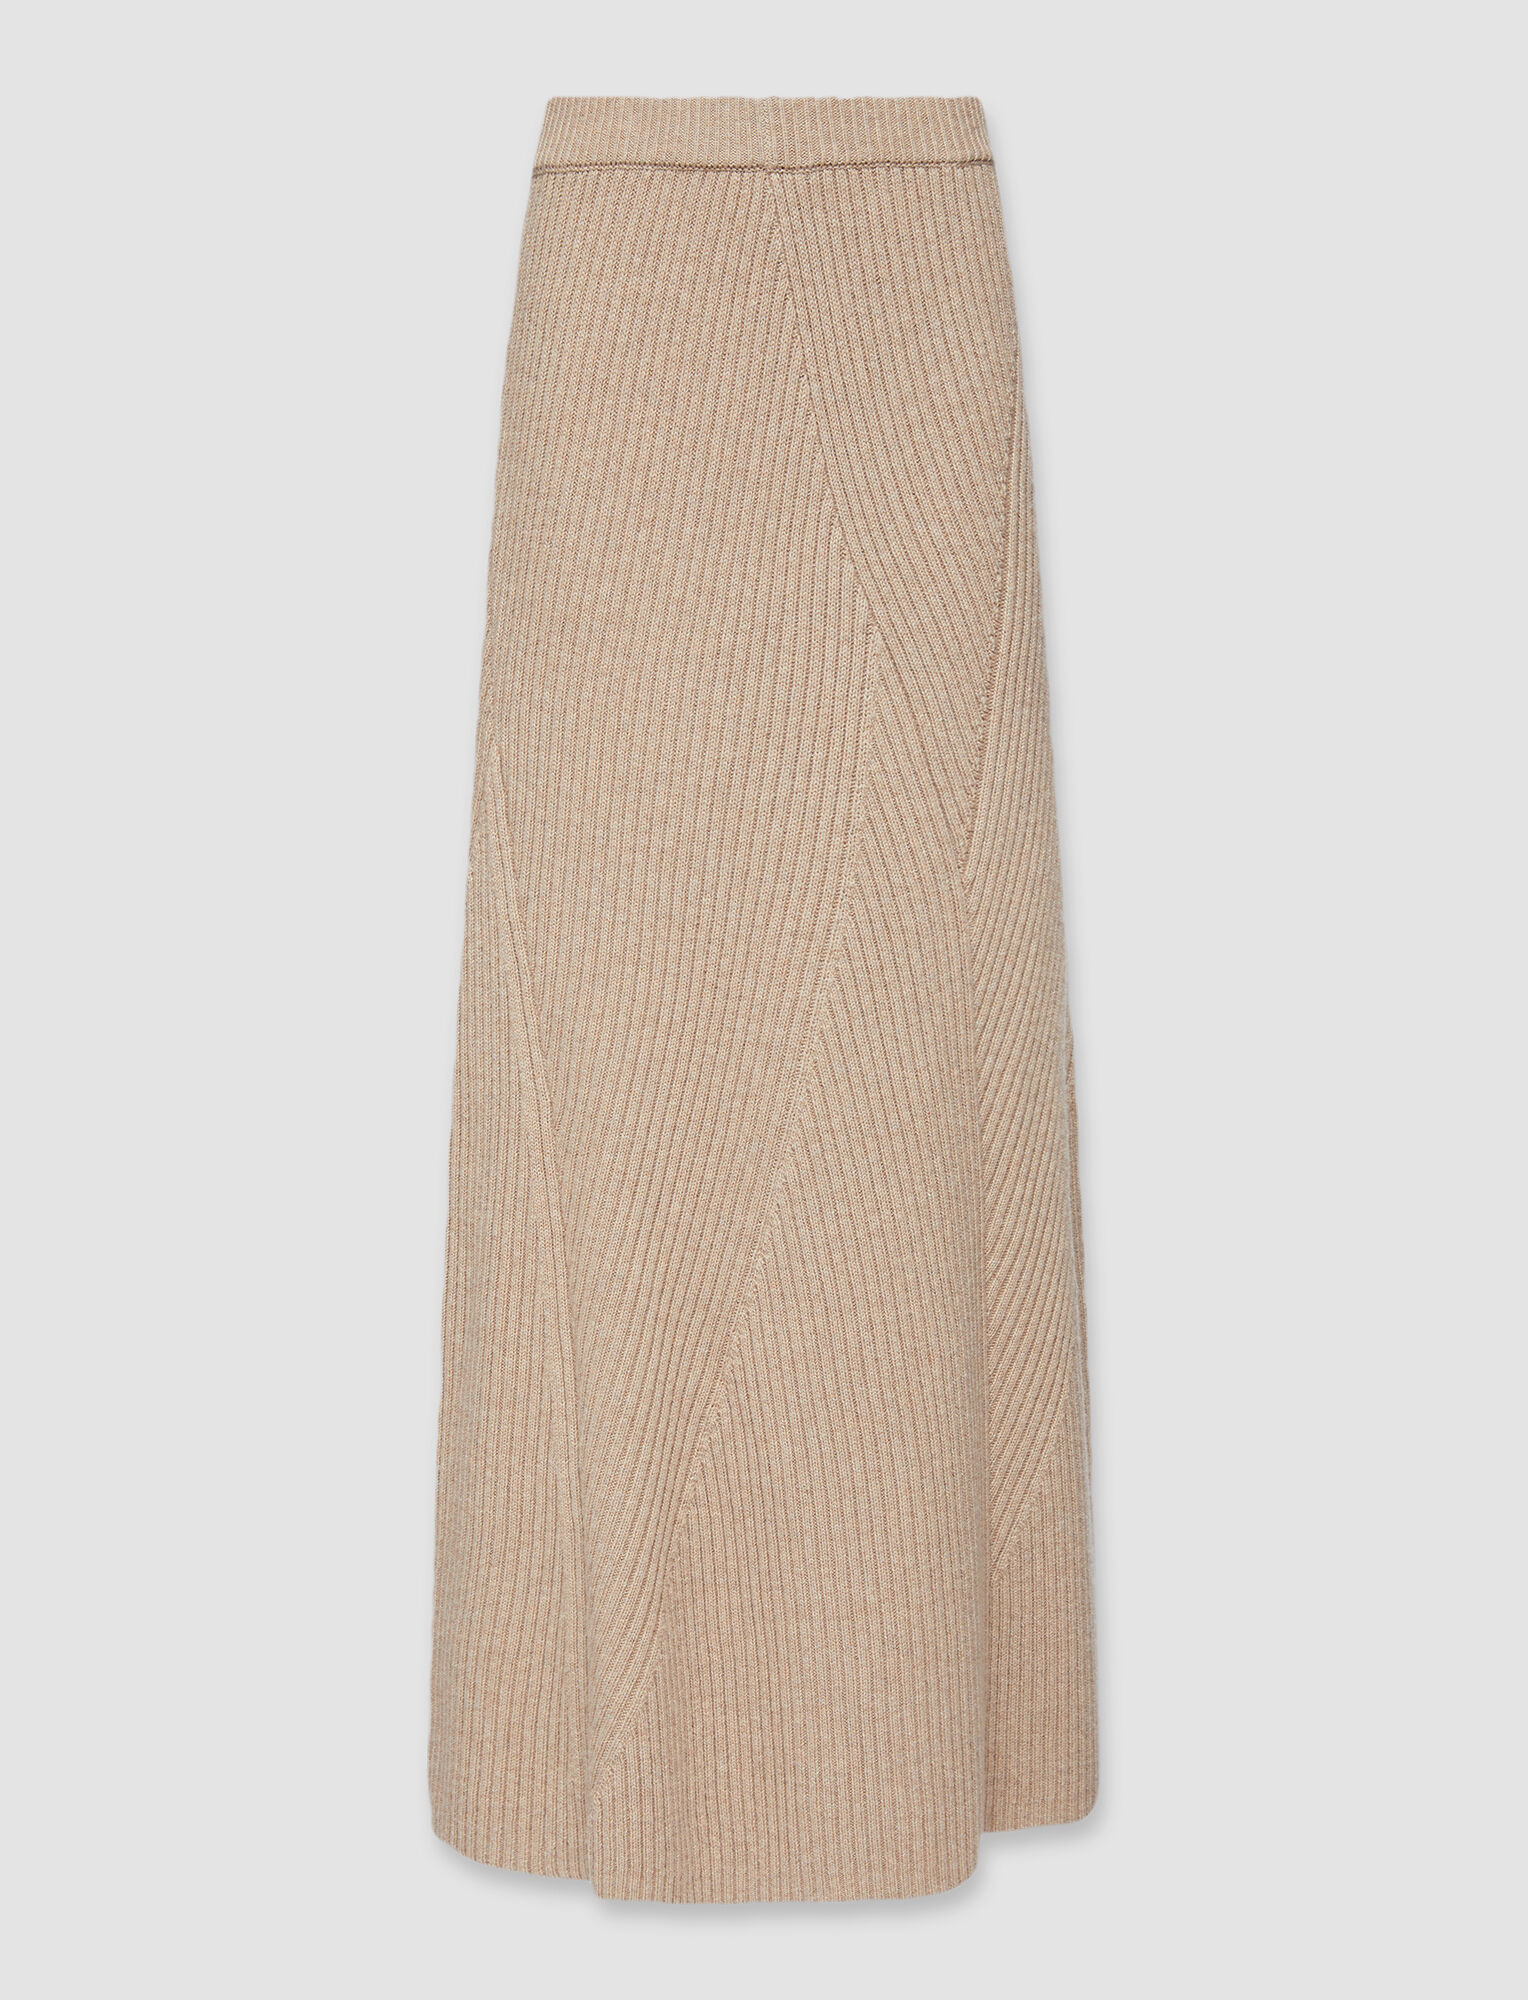 Joseph, Luxe Cardigan Stitch Skirt, in Cobble Stone